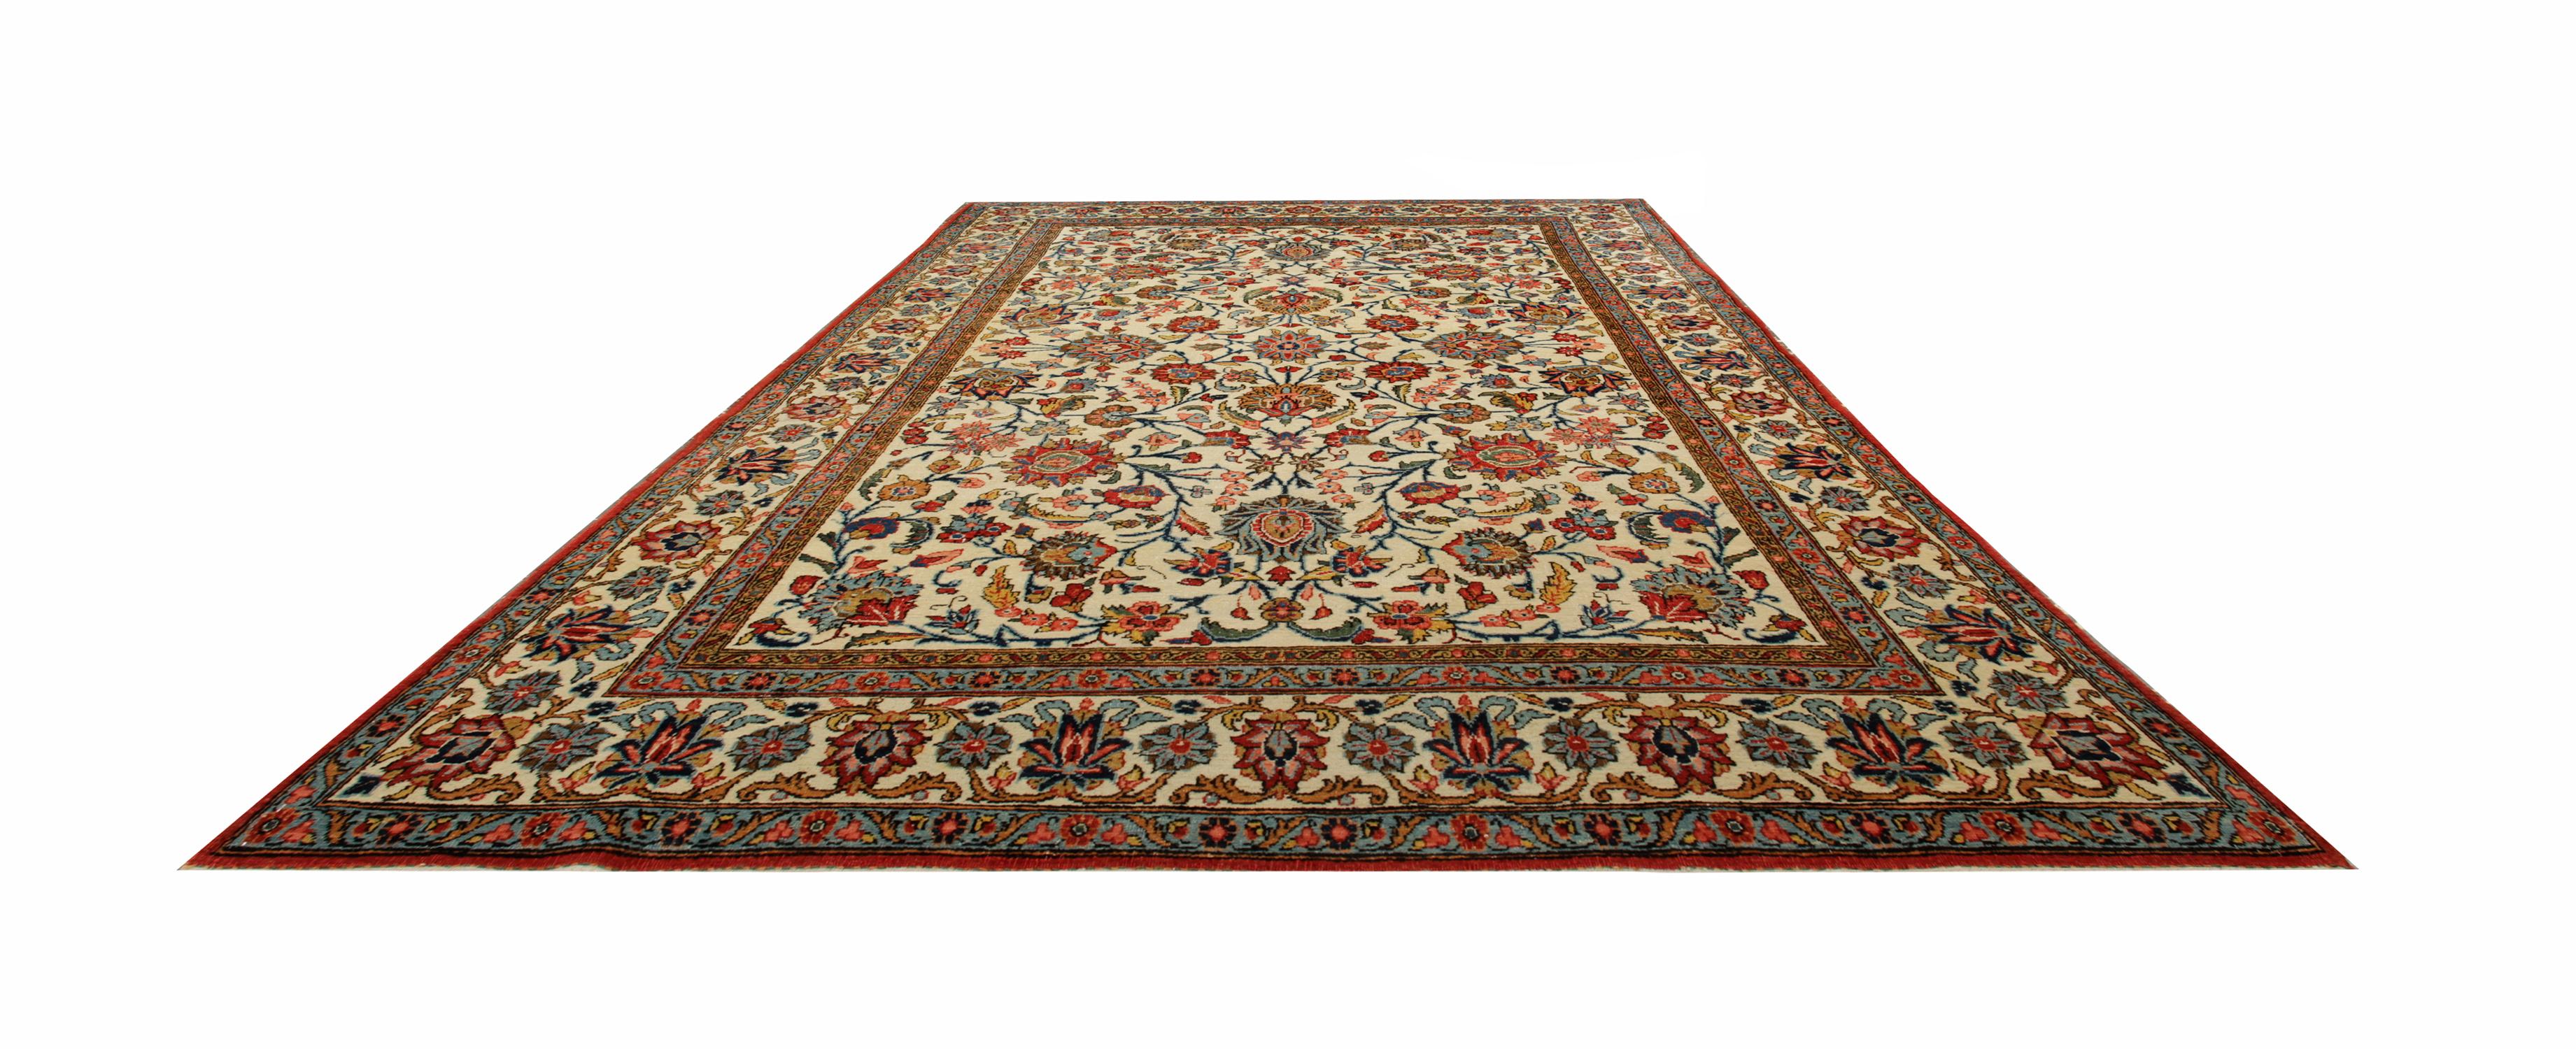 Caucasian Antique Oriental Area Rug Traditional Floral Cream Wool Carpet For Sale